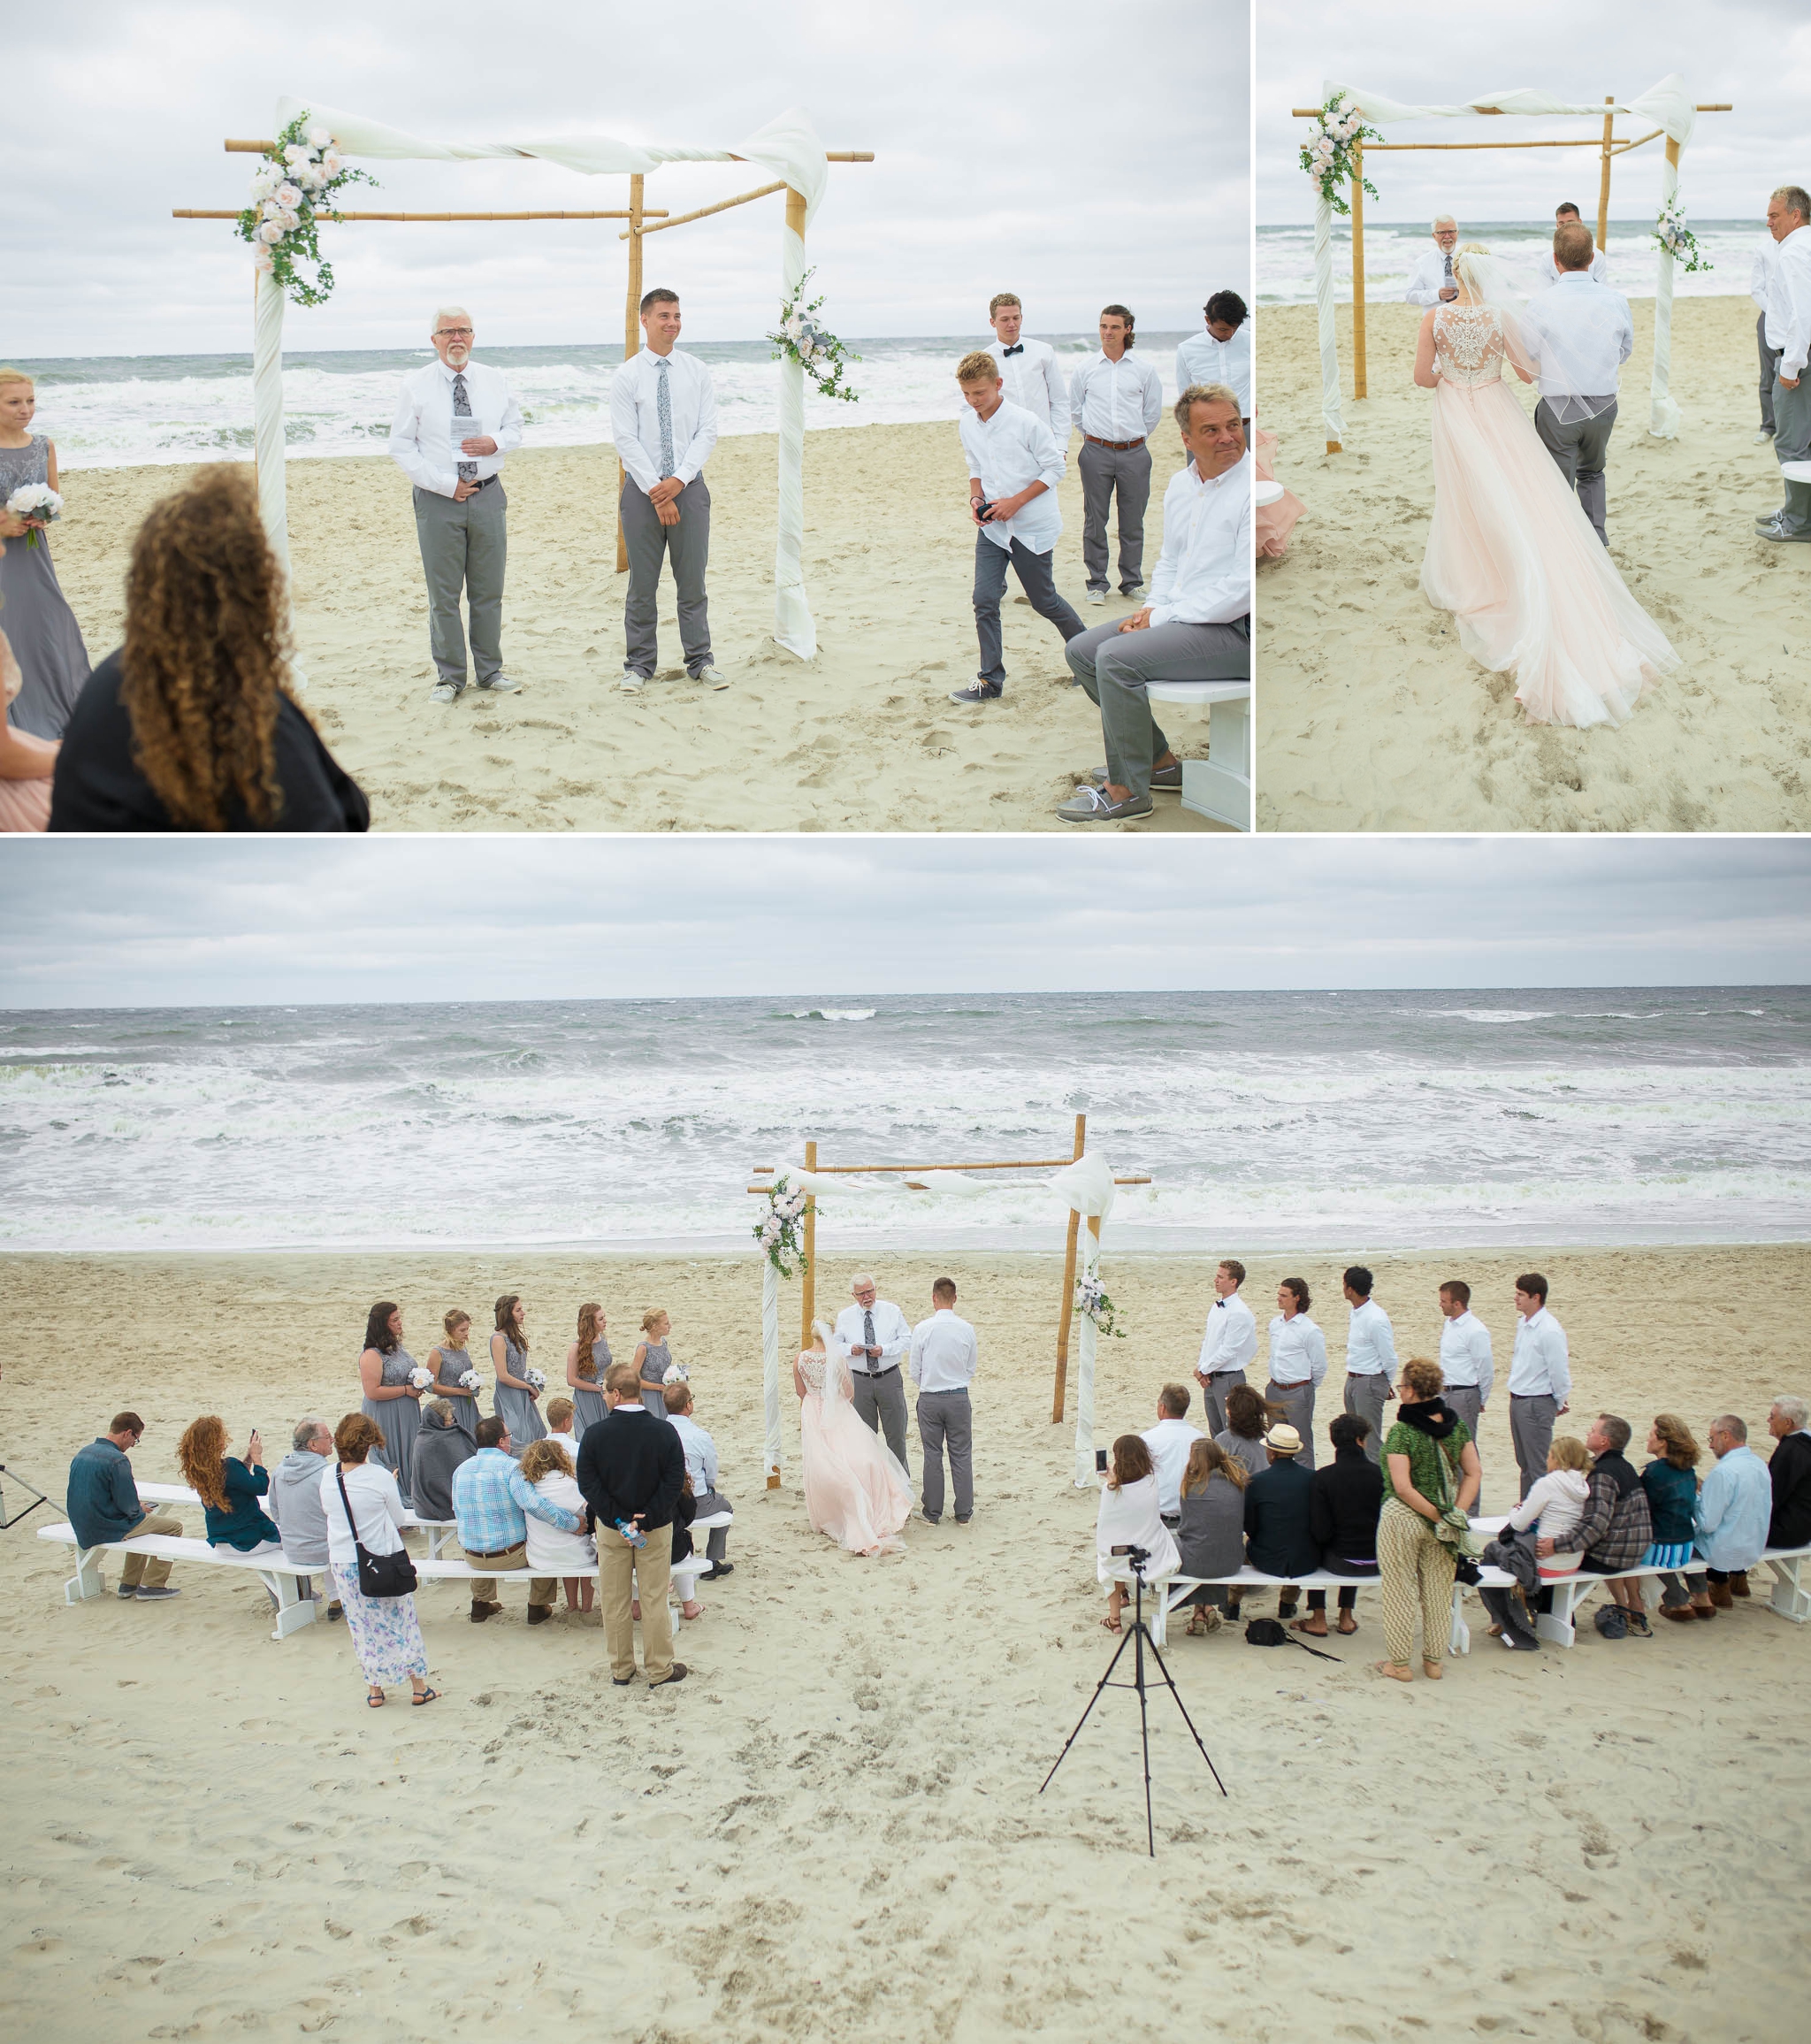  Beach Ceremony in Corolla NC&nbsp;     Outer Banks Beach Wedding Photographer - Johanna Dye Photography - OBX 